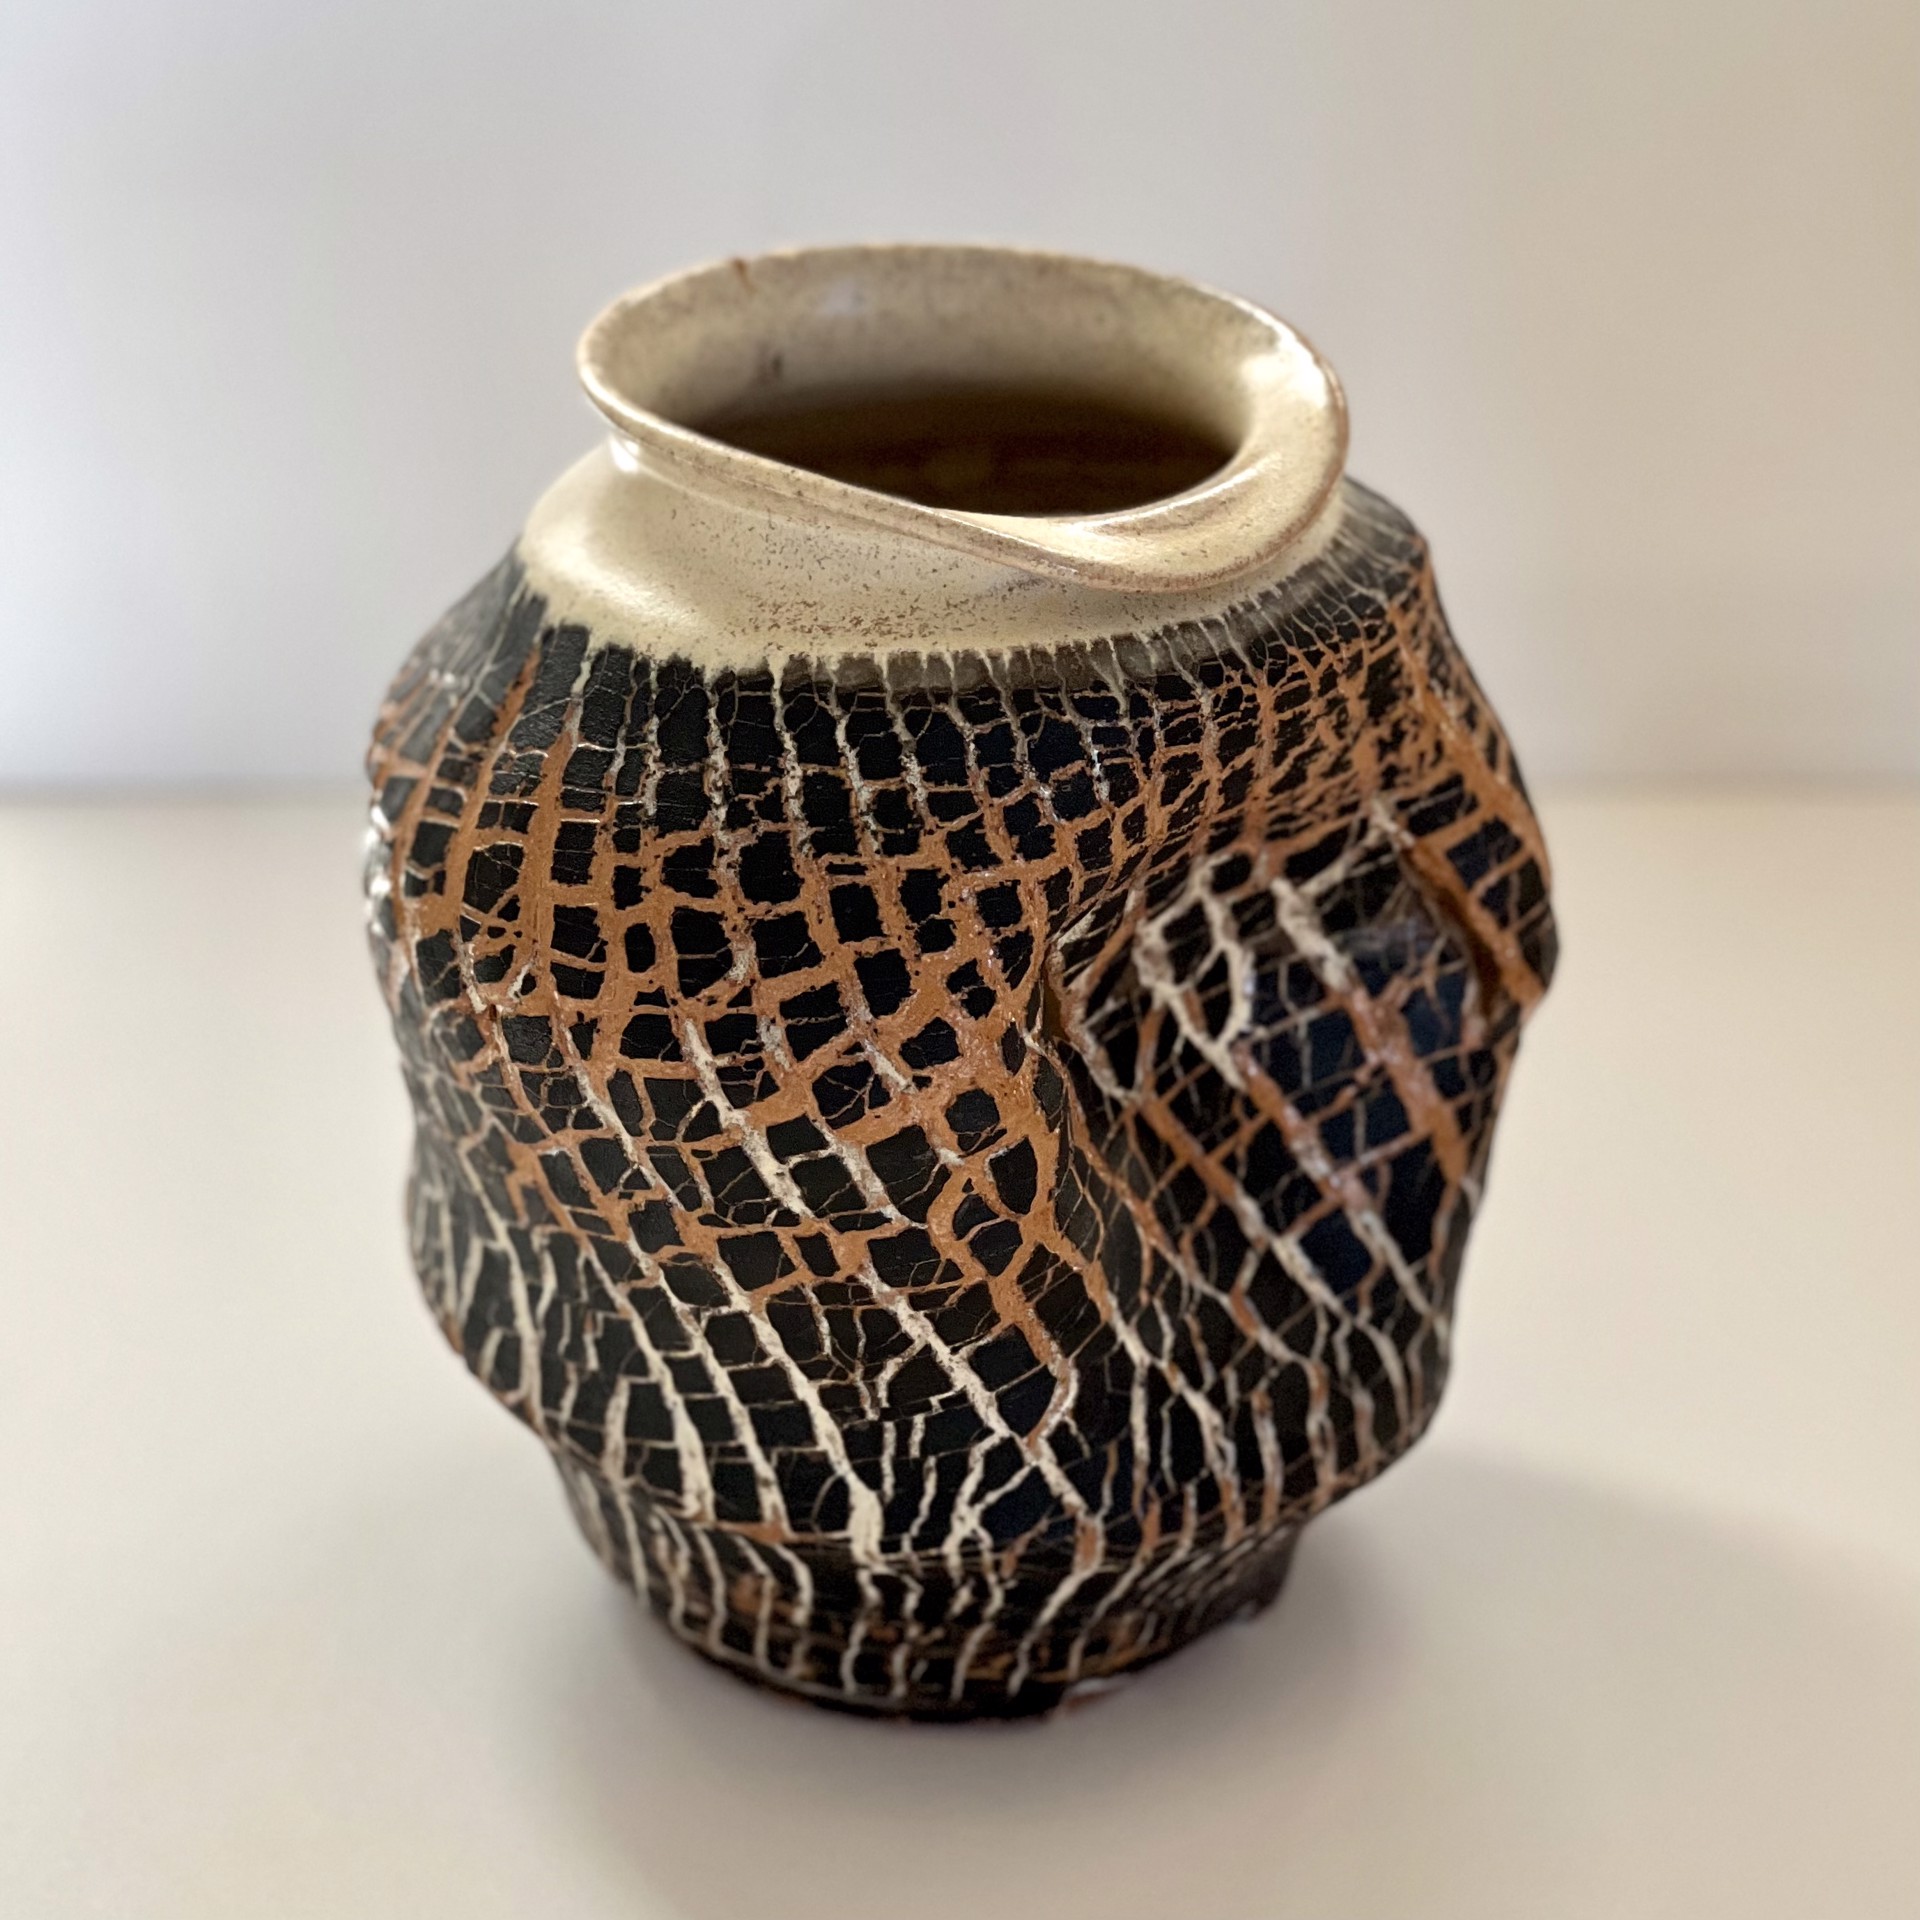 Vase 5 by David LaLomia